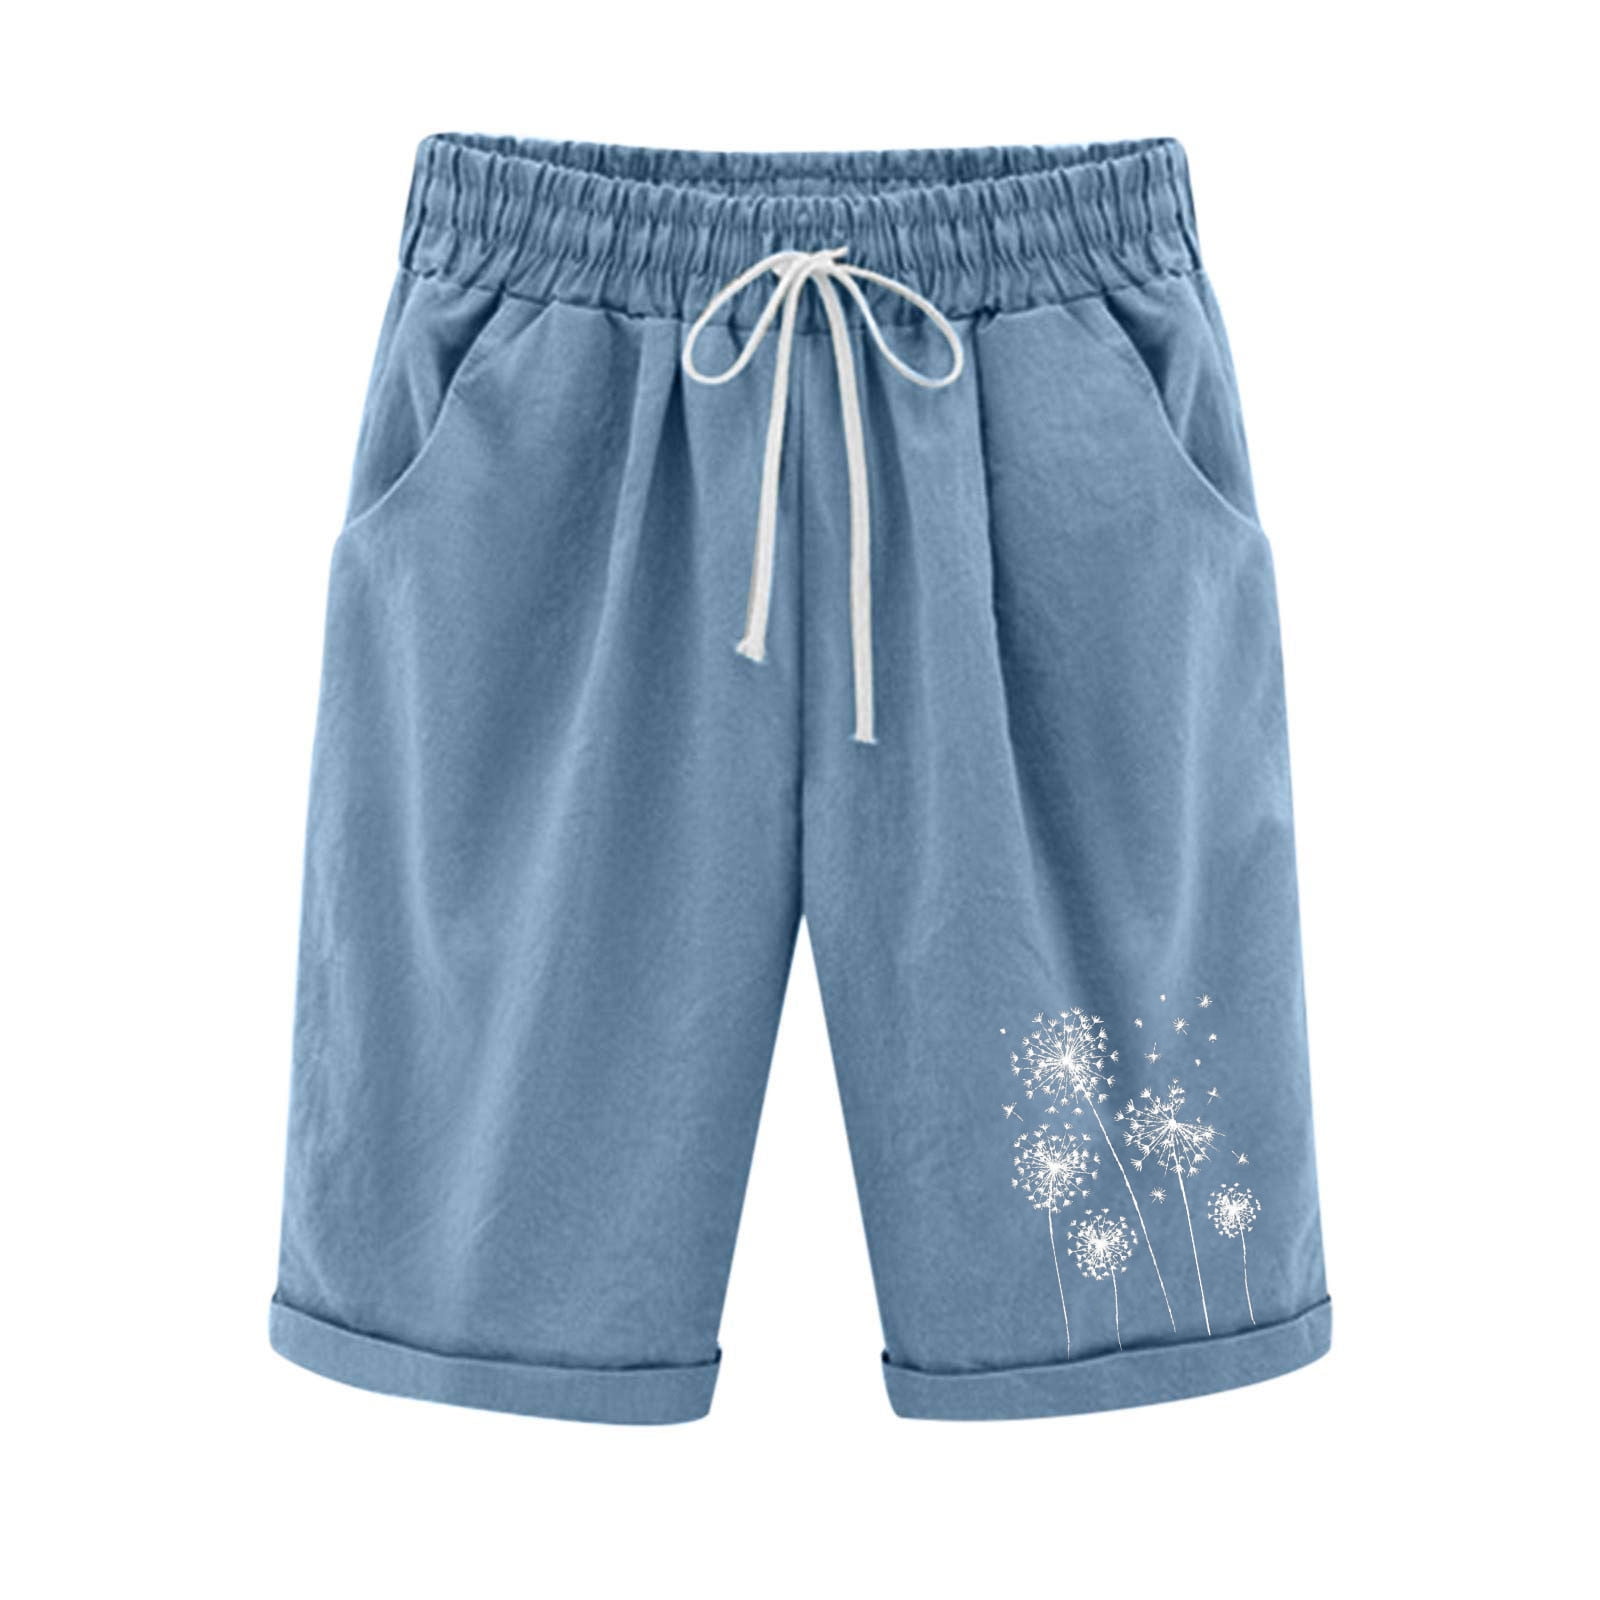 WYMPDSVI Cotton Linen Hot Pants Womens Shorts Plus Size Summer Loose ...